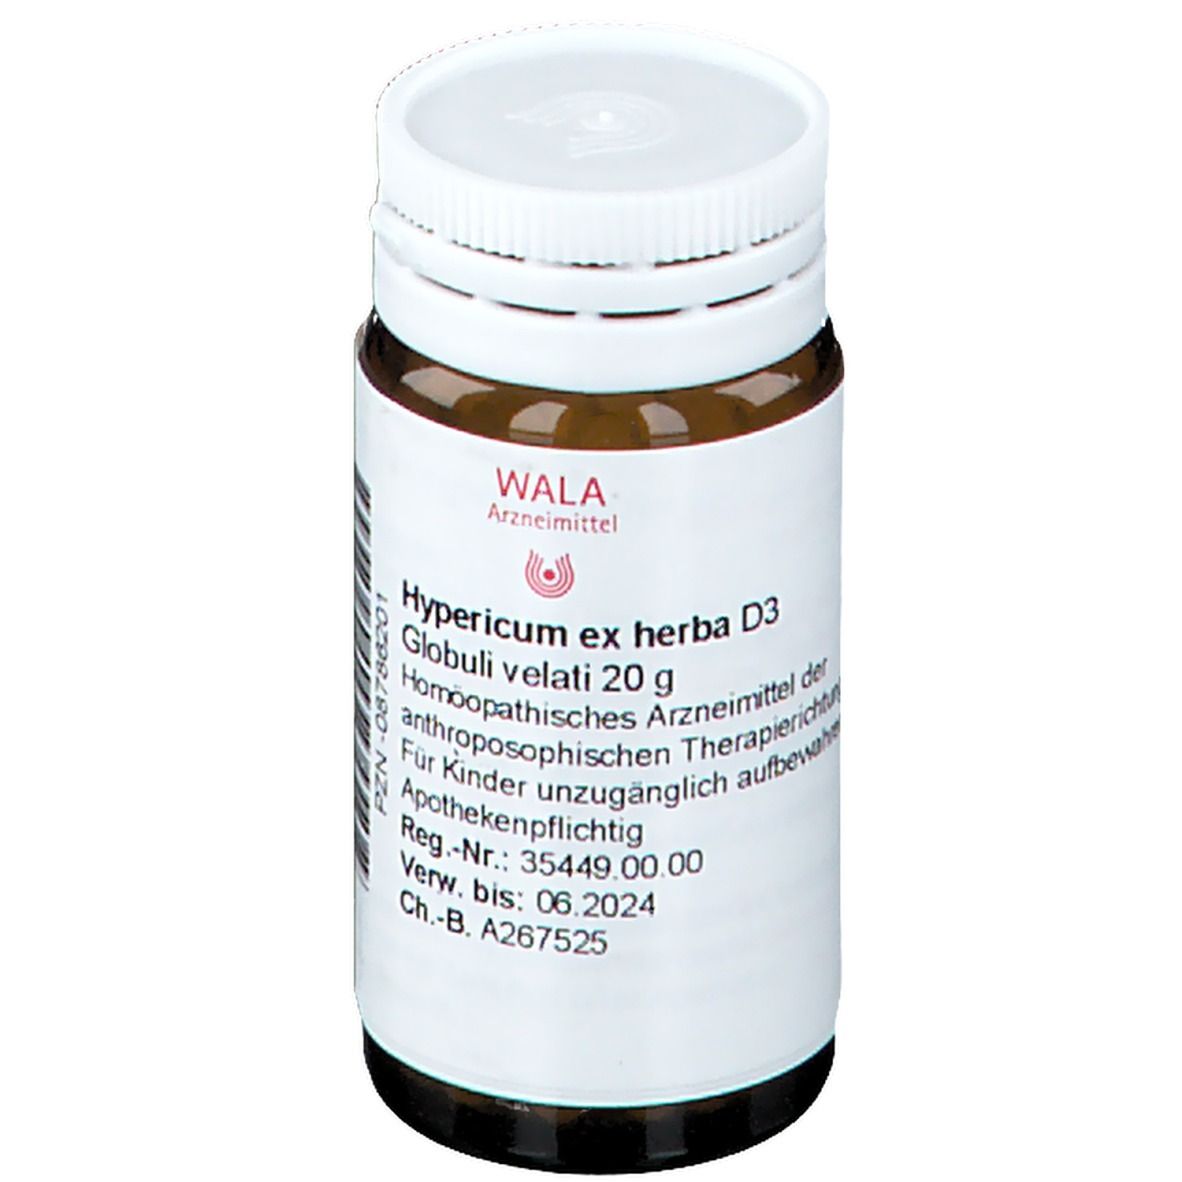 WALA® Hypericum ex herba D 3